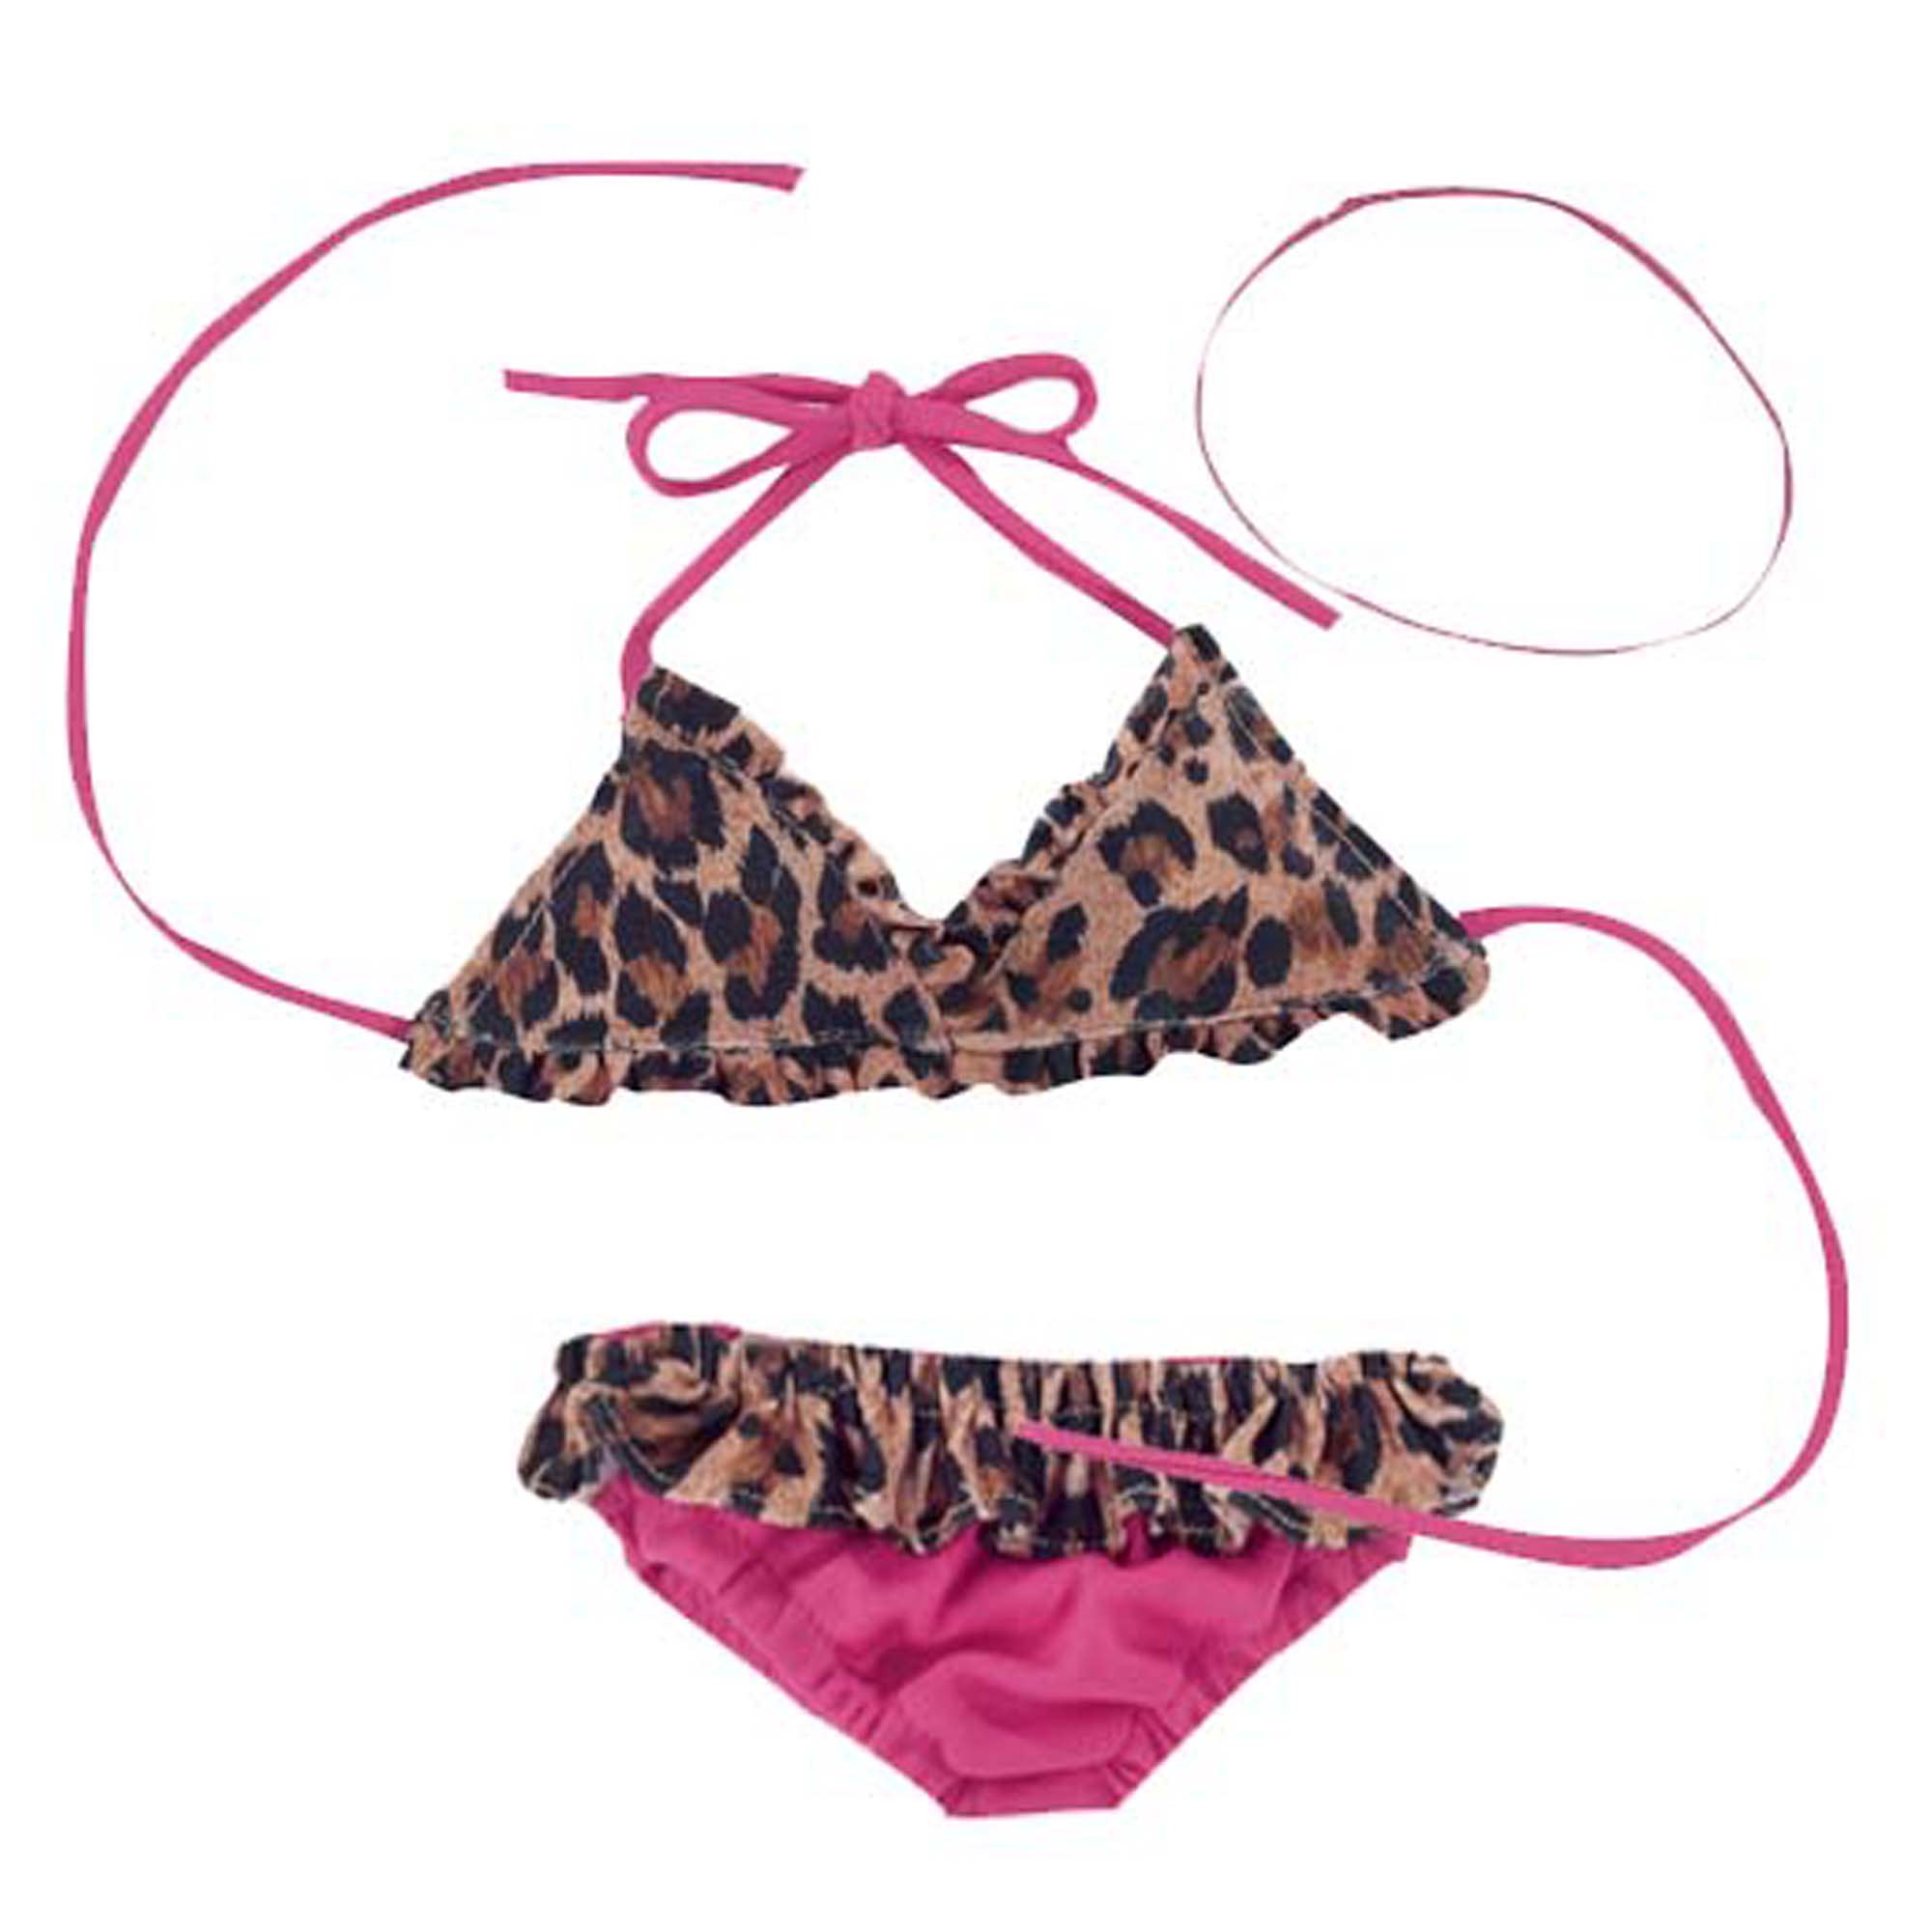 Sophia’s Super-Cute Animal Leopard Print V-Neck Halter Summer Bikini Swimsuit with Ruffle Details for 18” Dolls, Tan/Hot Pink